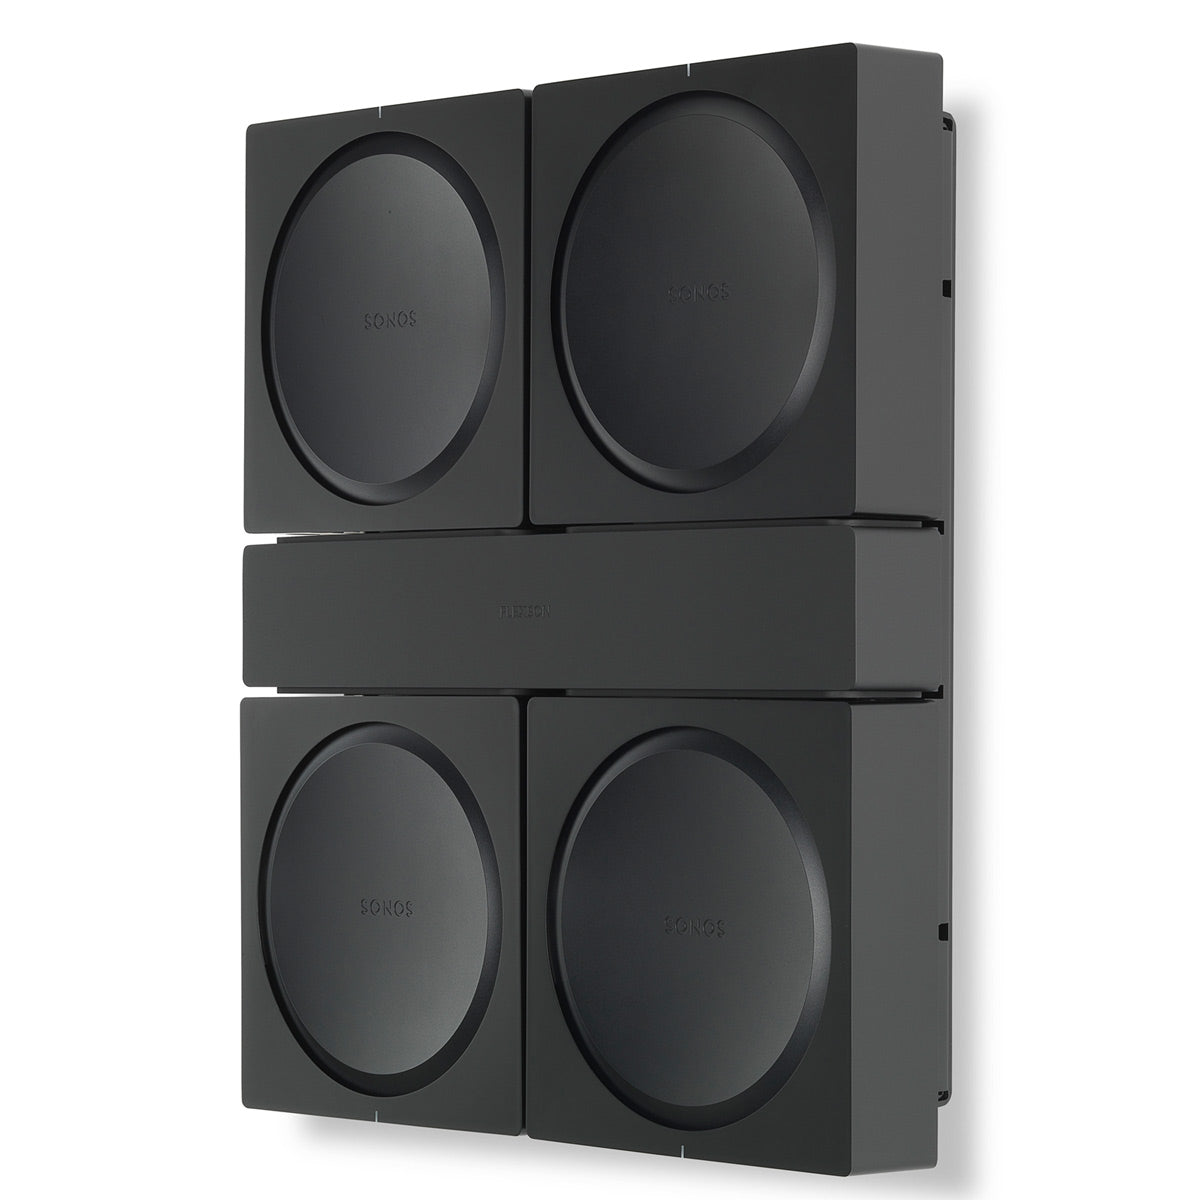 Sonos AMP Wireless Hi-Fi Players (4) with Flexson Wall Mount (Black)